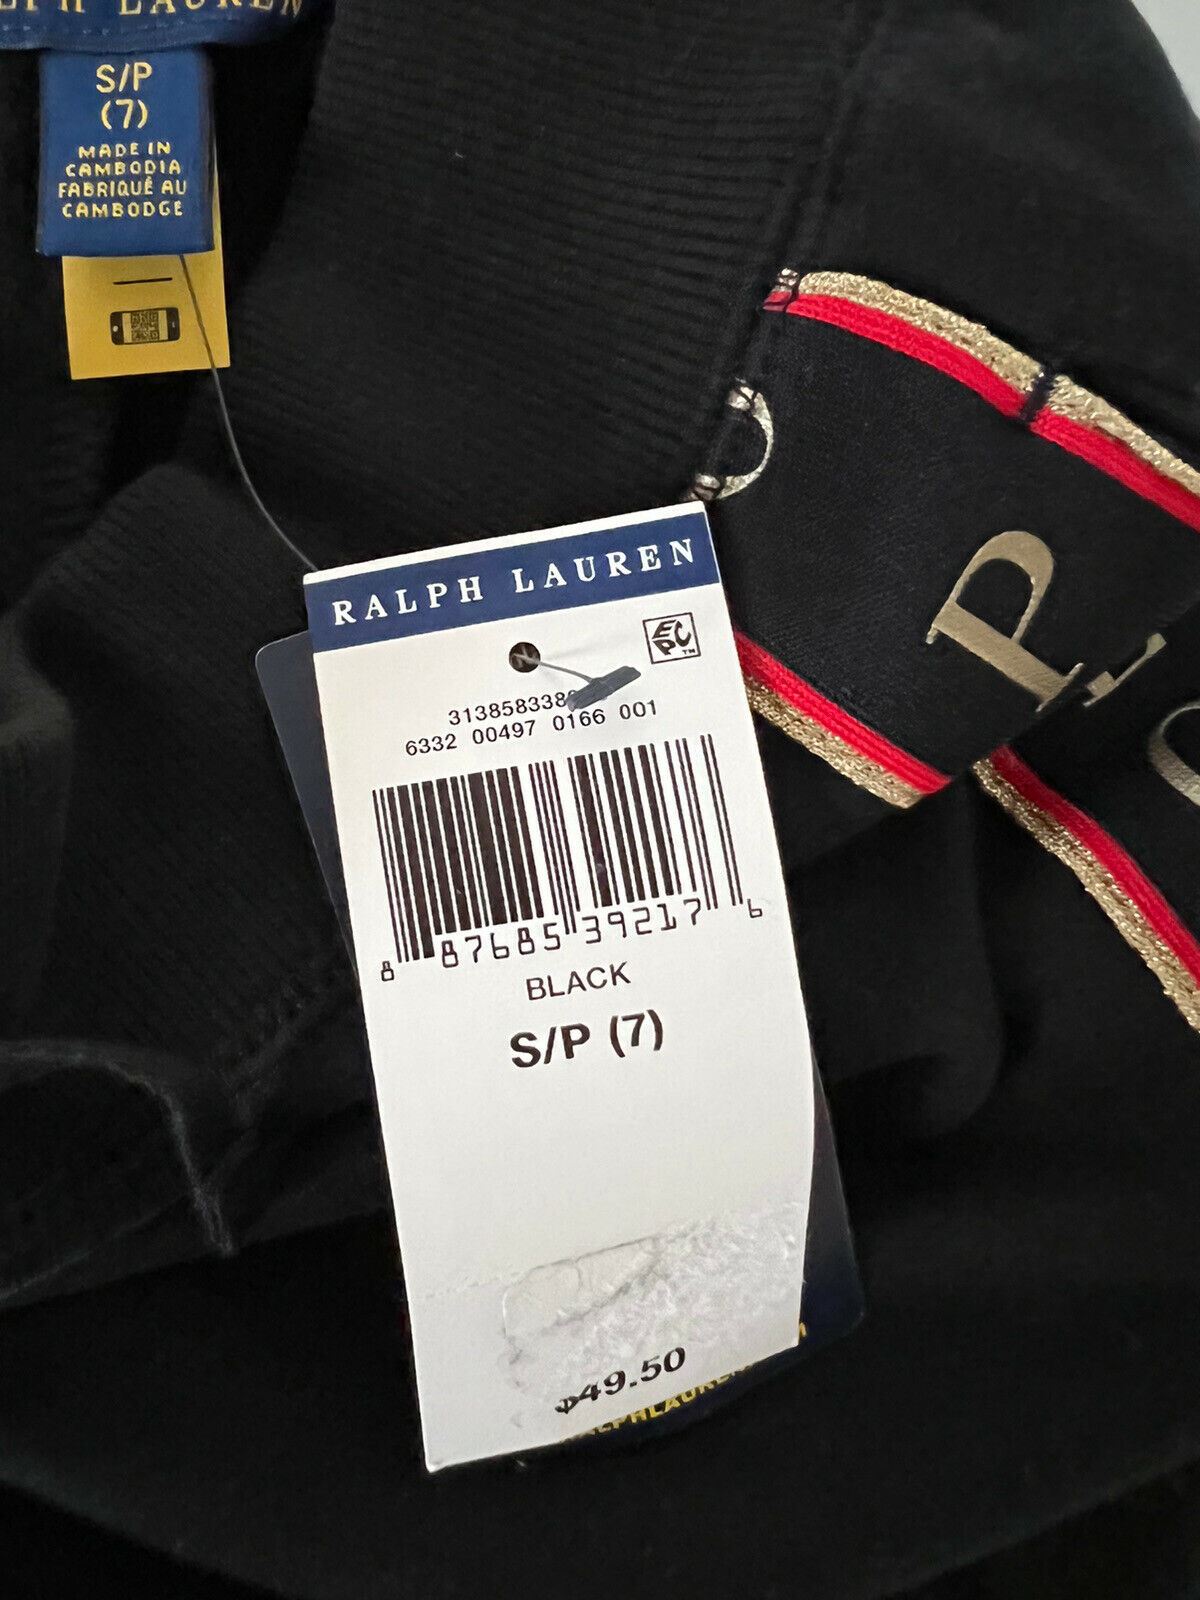 NWT Polo Ralph Lauren Boy's Black Pant S (7)